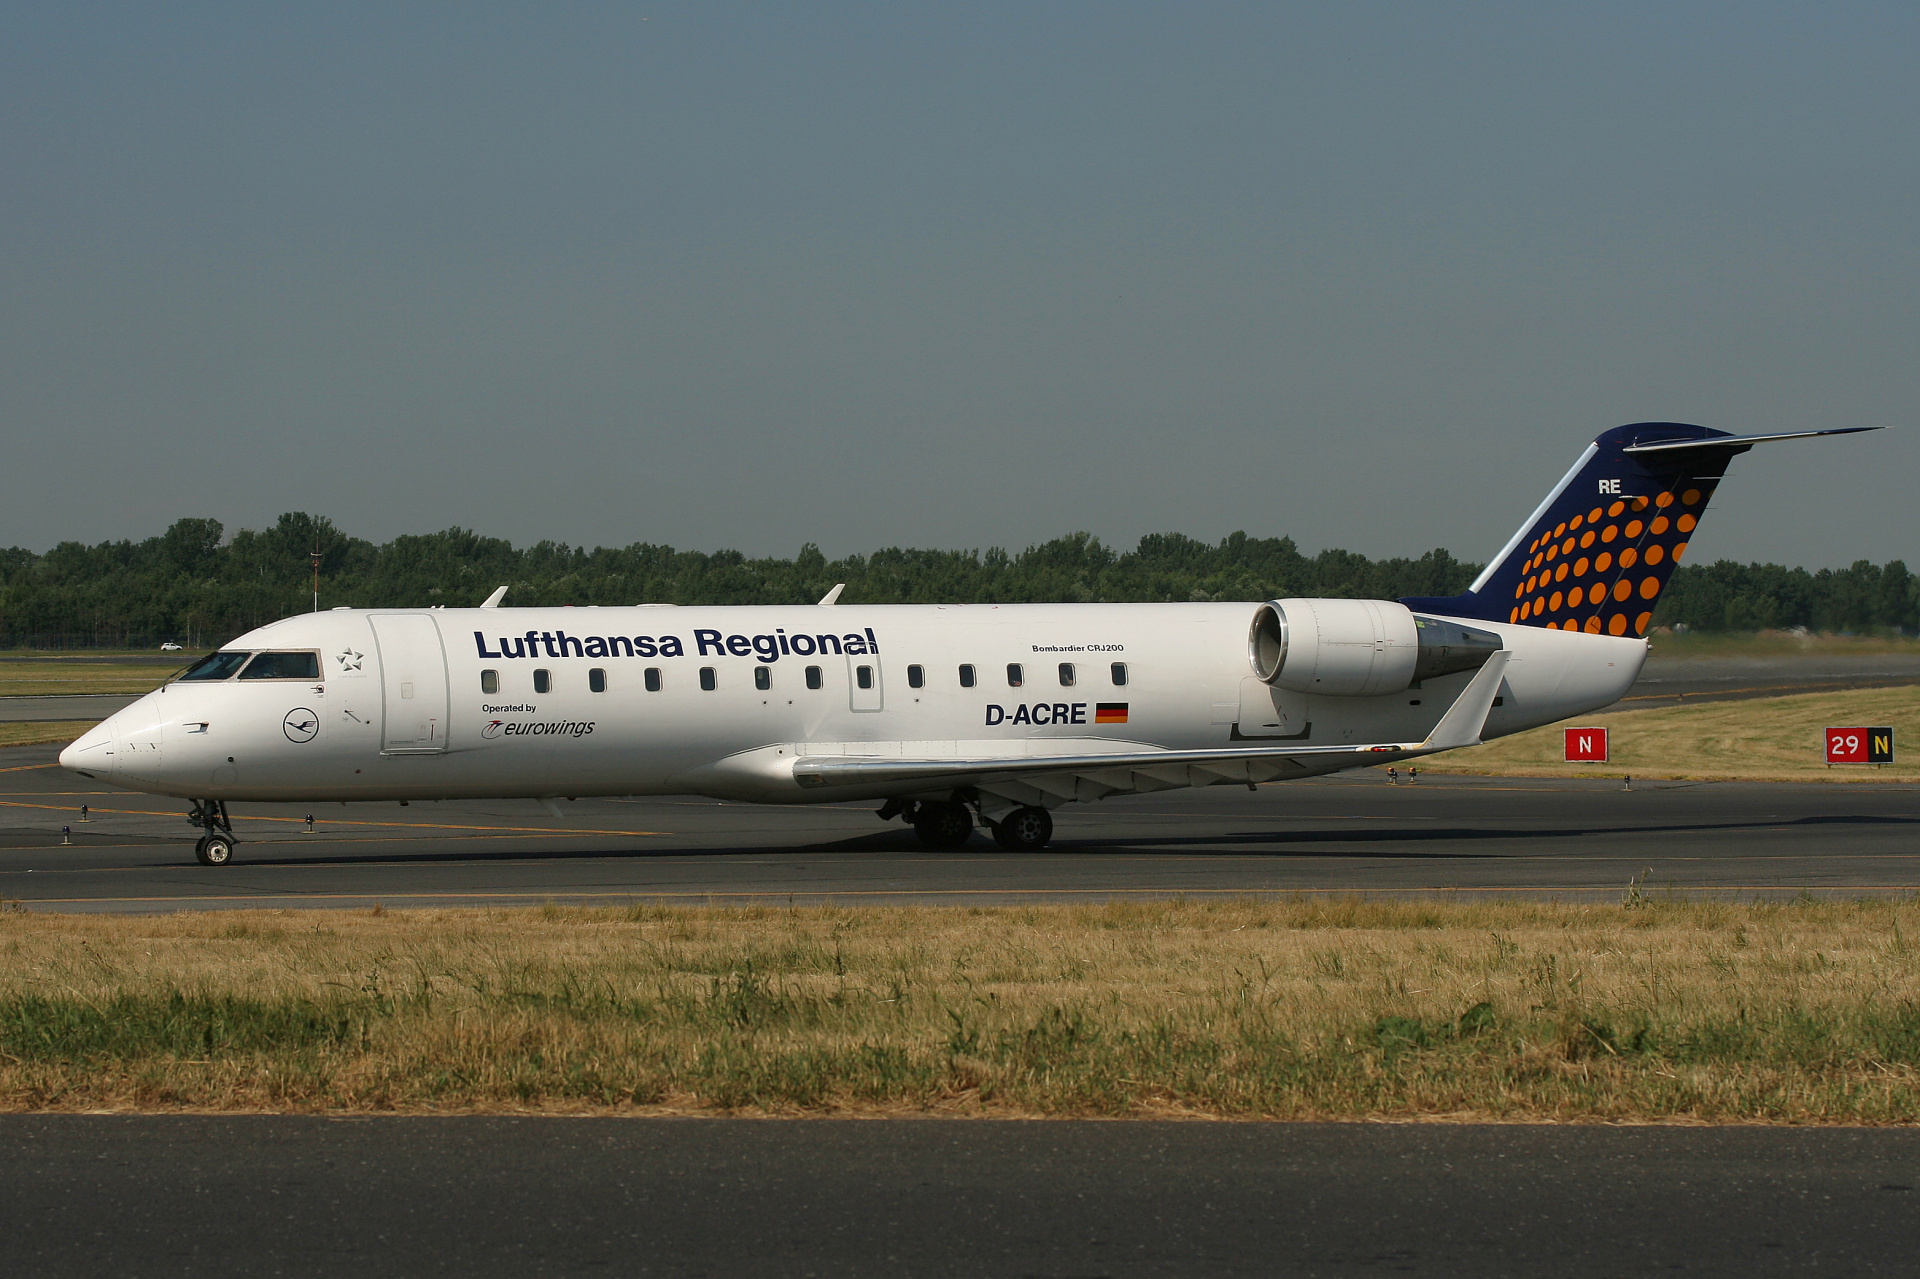 D-ACRE (Eurowings) (Aircraft » EPWA Spotting » Bombardier CL-600 Regional Jet » CRJ-200 » Lufthansa Regional)